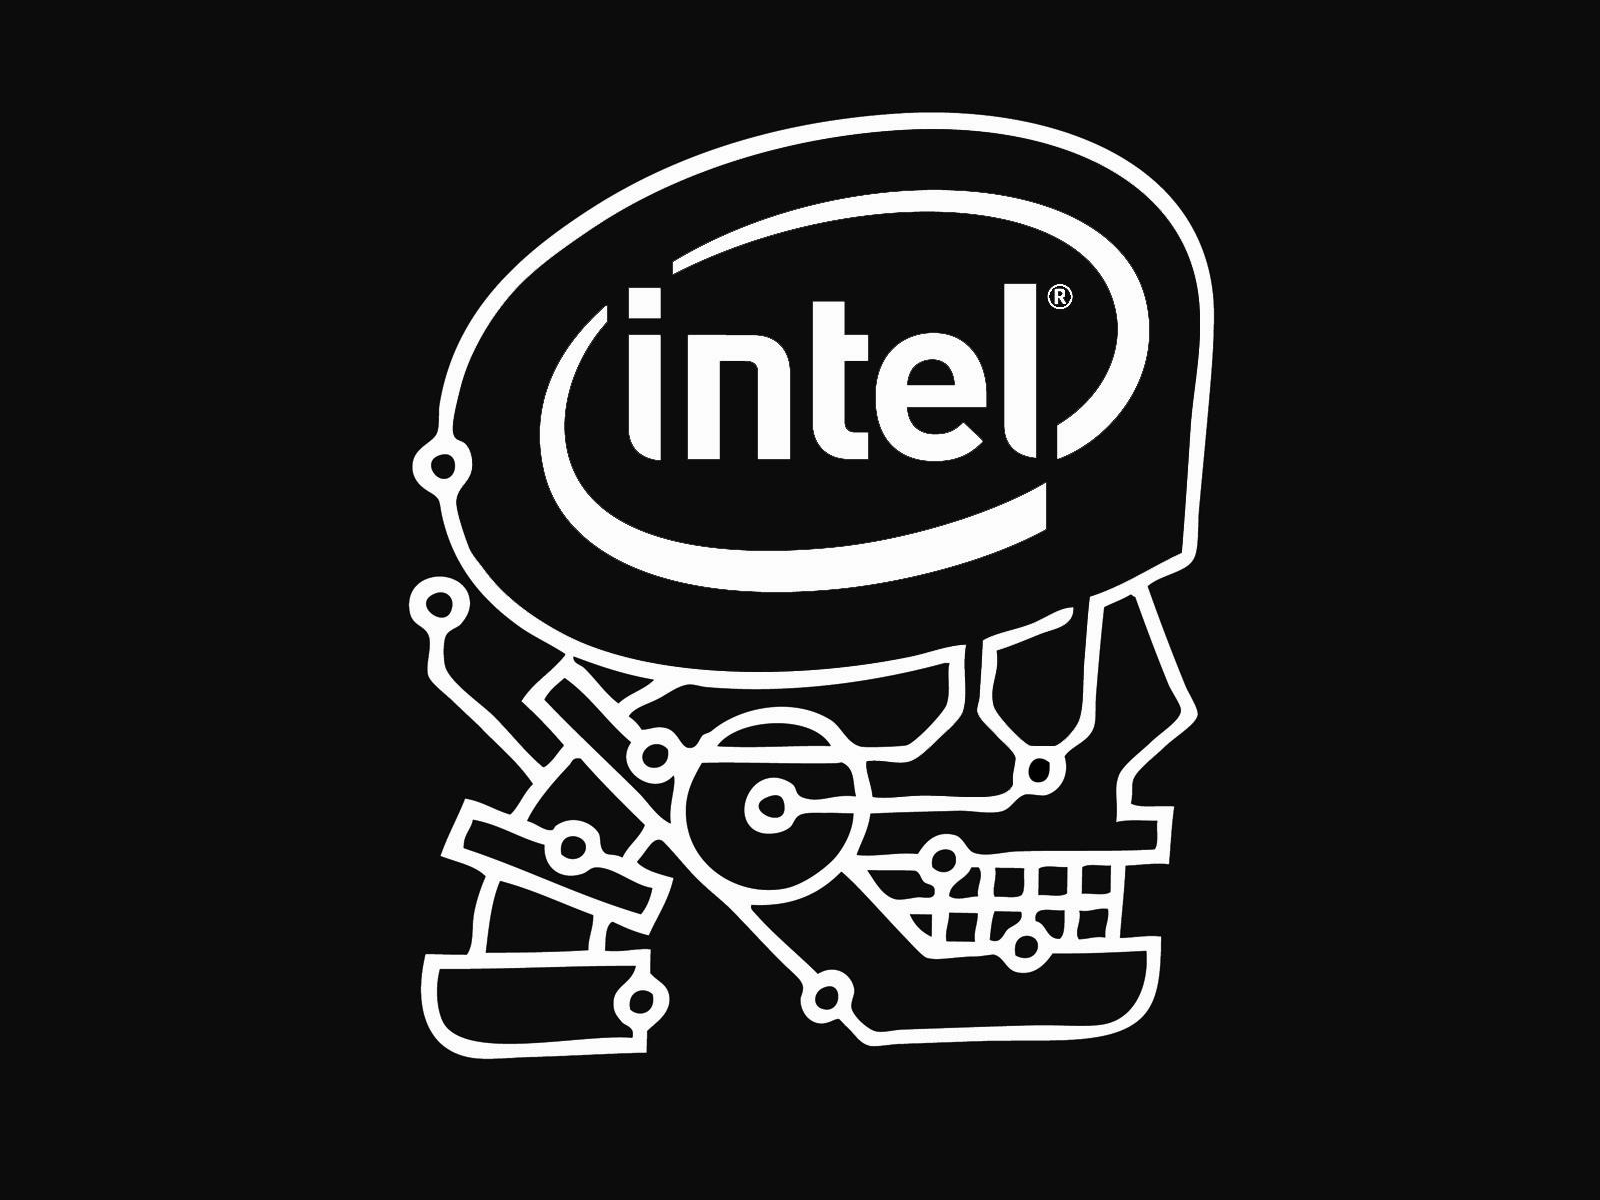 intel logo black background